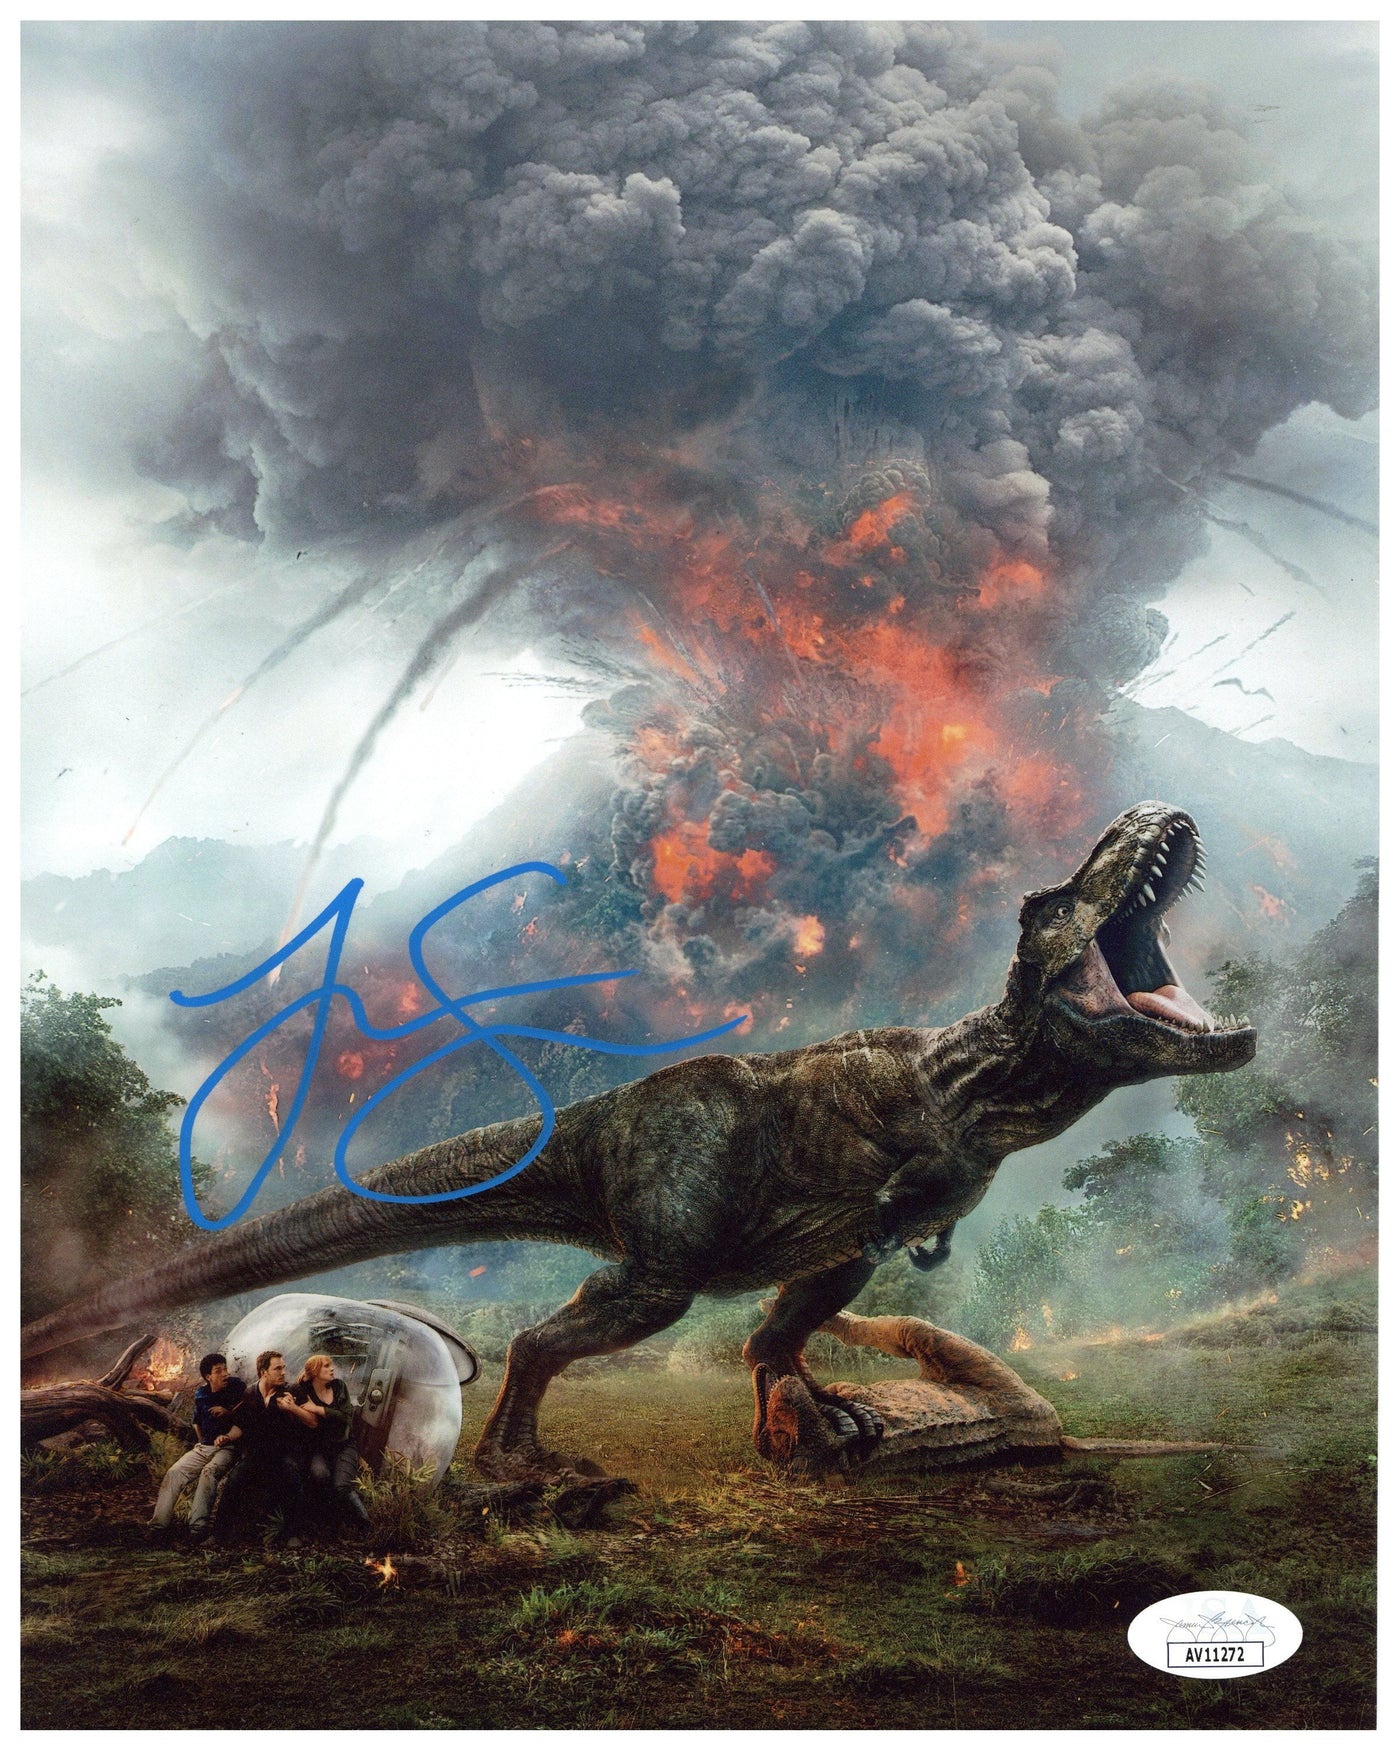 Justice Smith Signed 8x10 Photo Jurassic World Autographed JSA COA